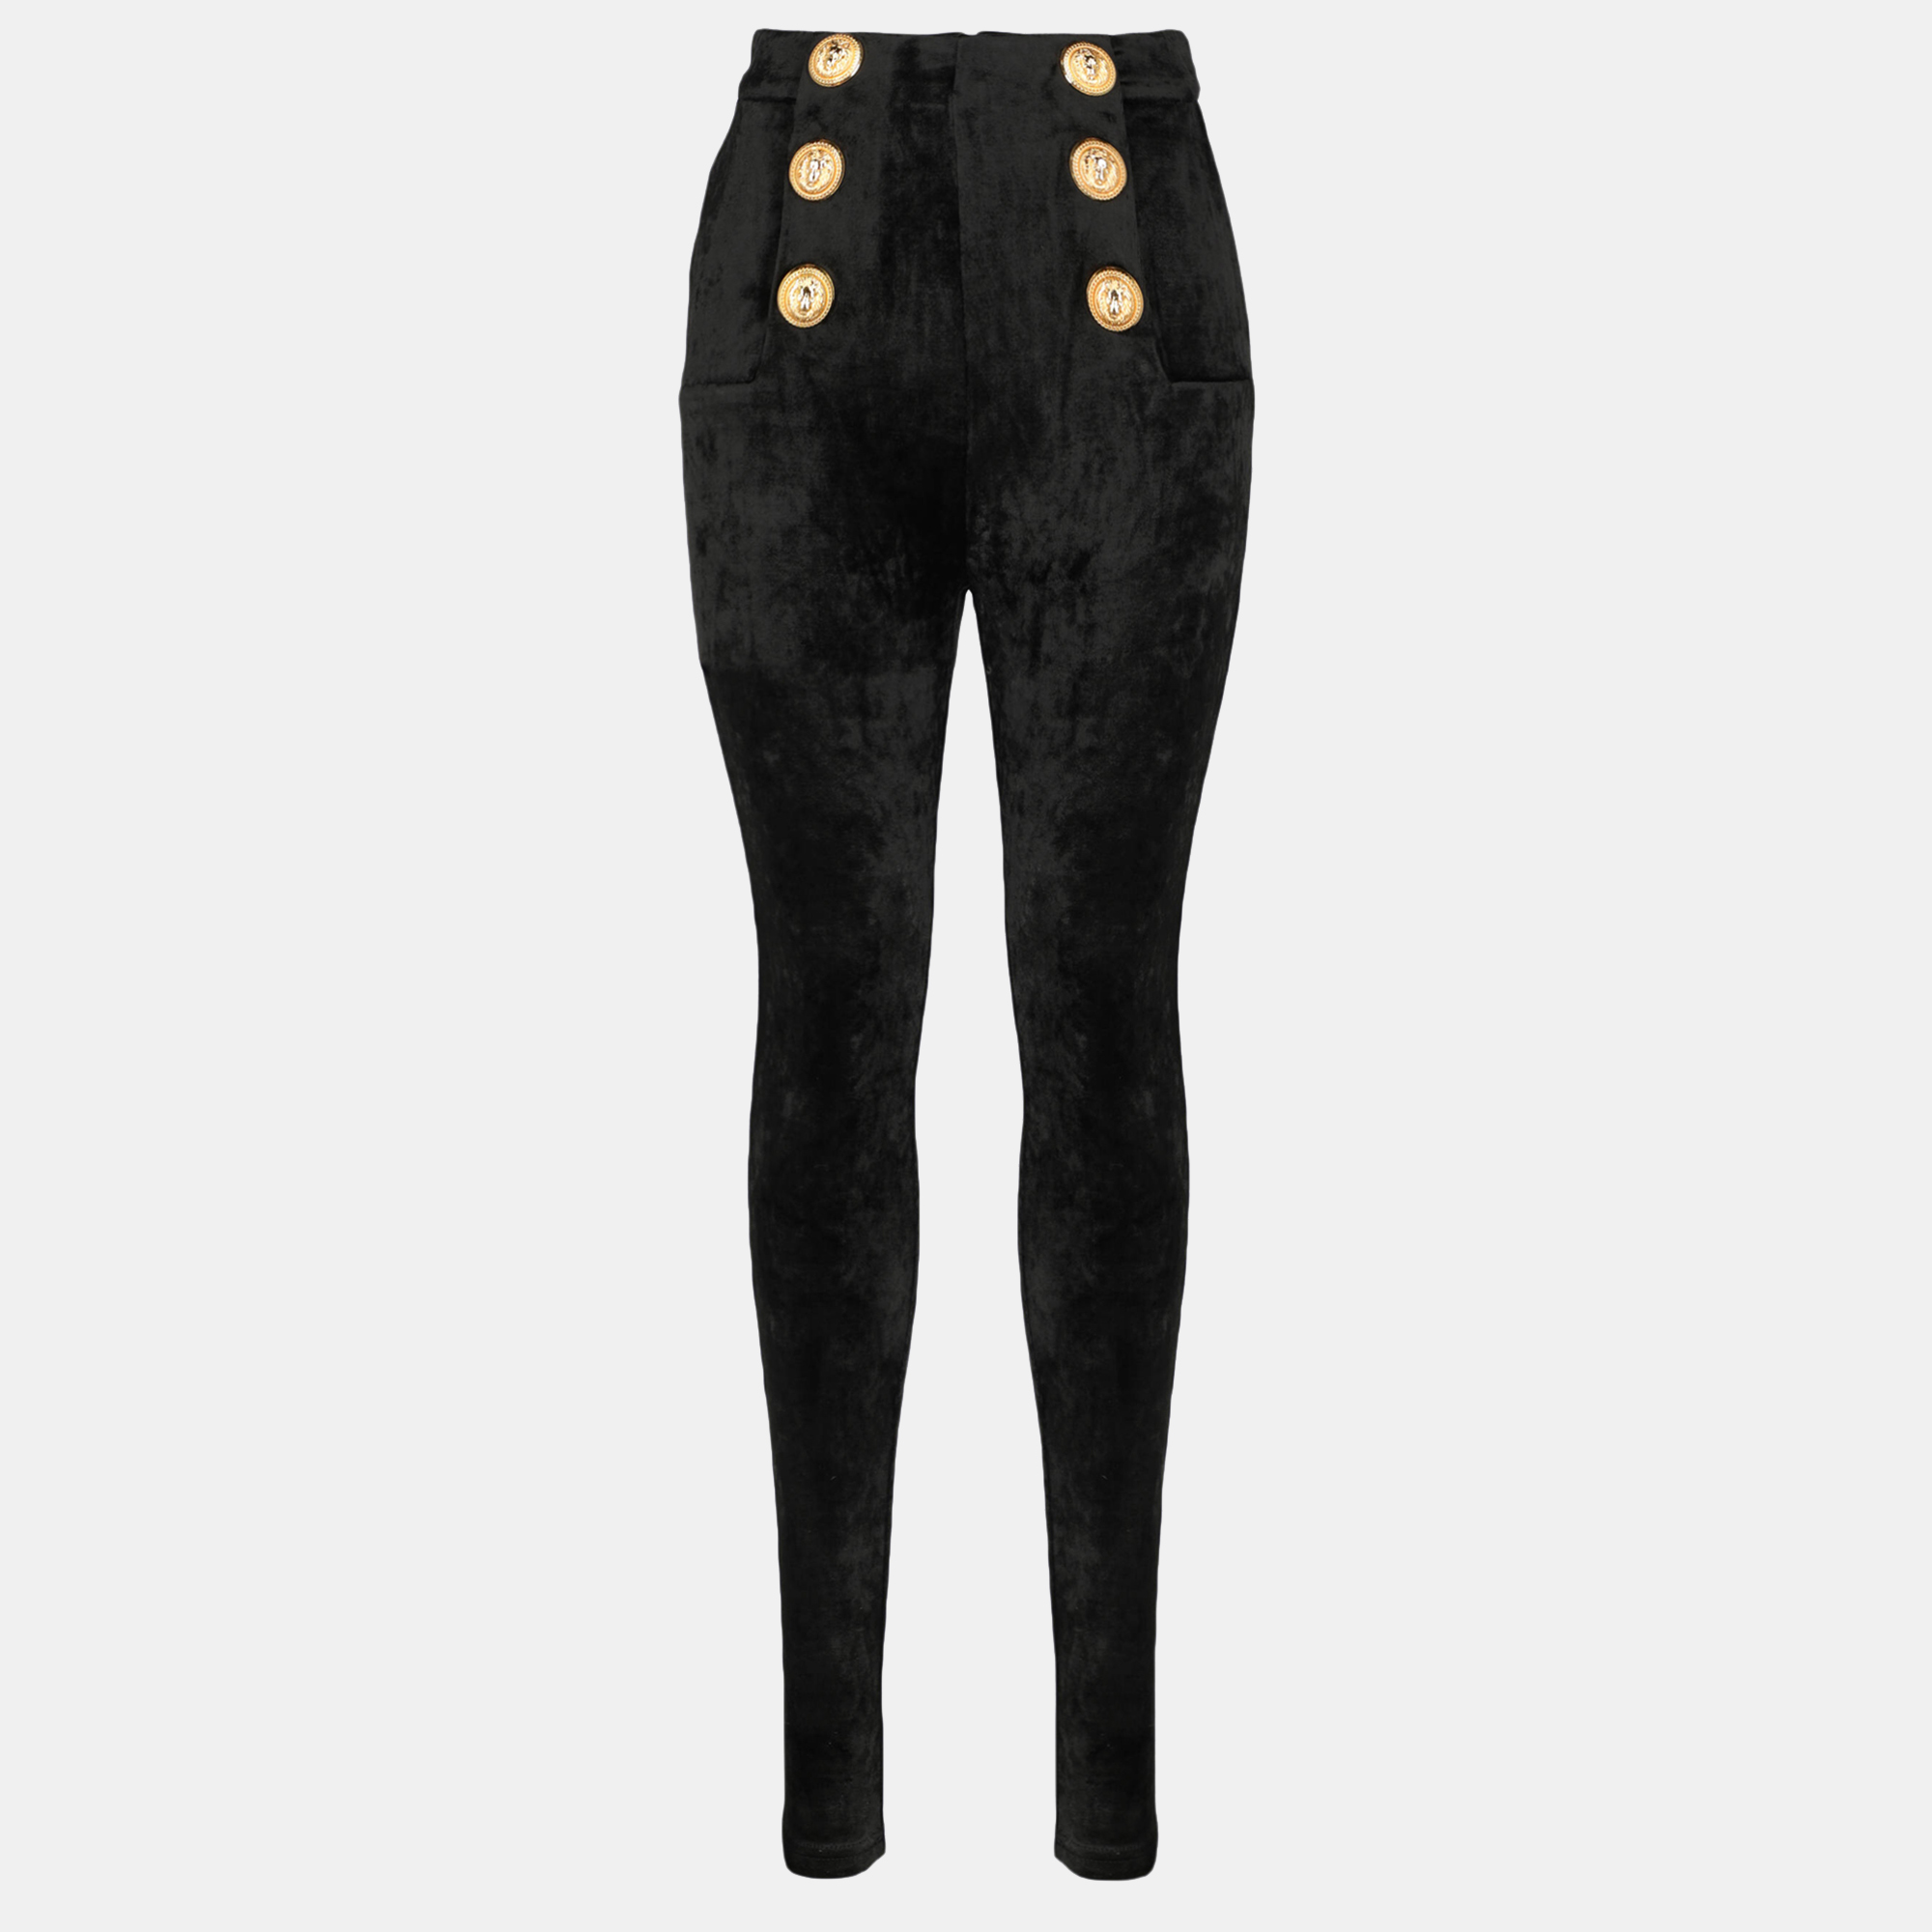 Balmain Women's Synthetic Fibers Trousers - Black - S